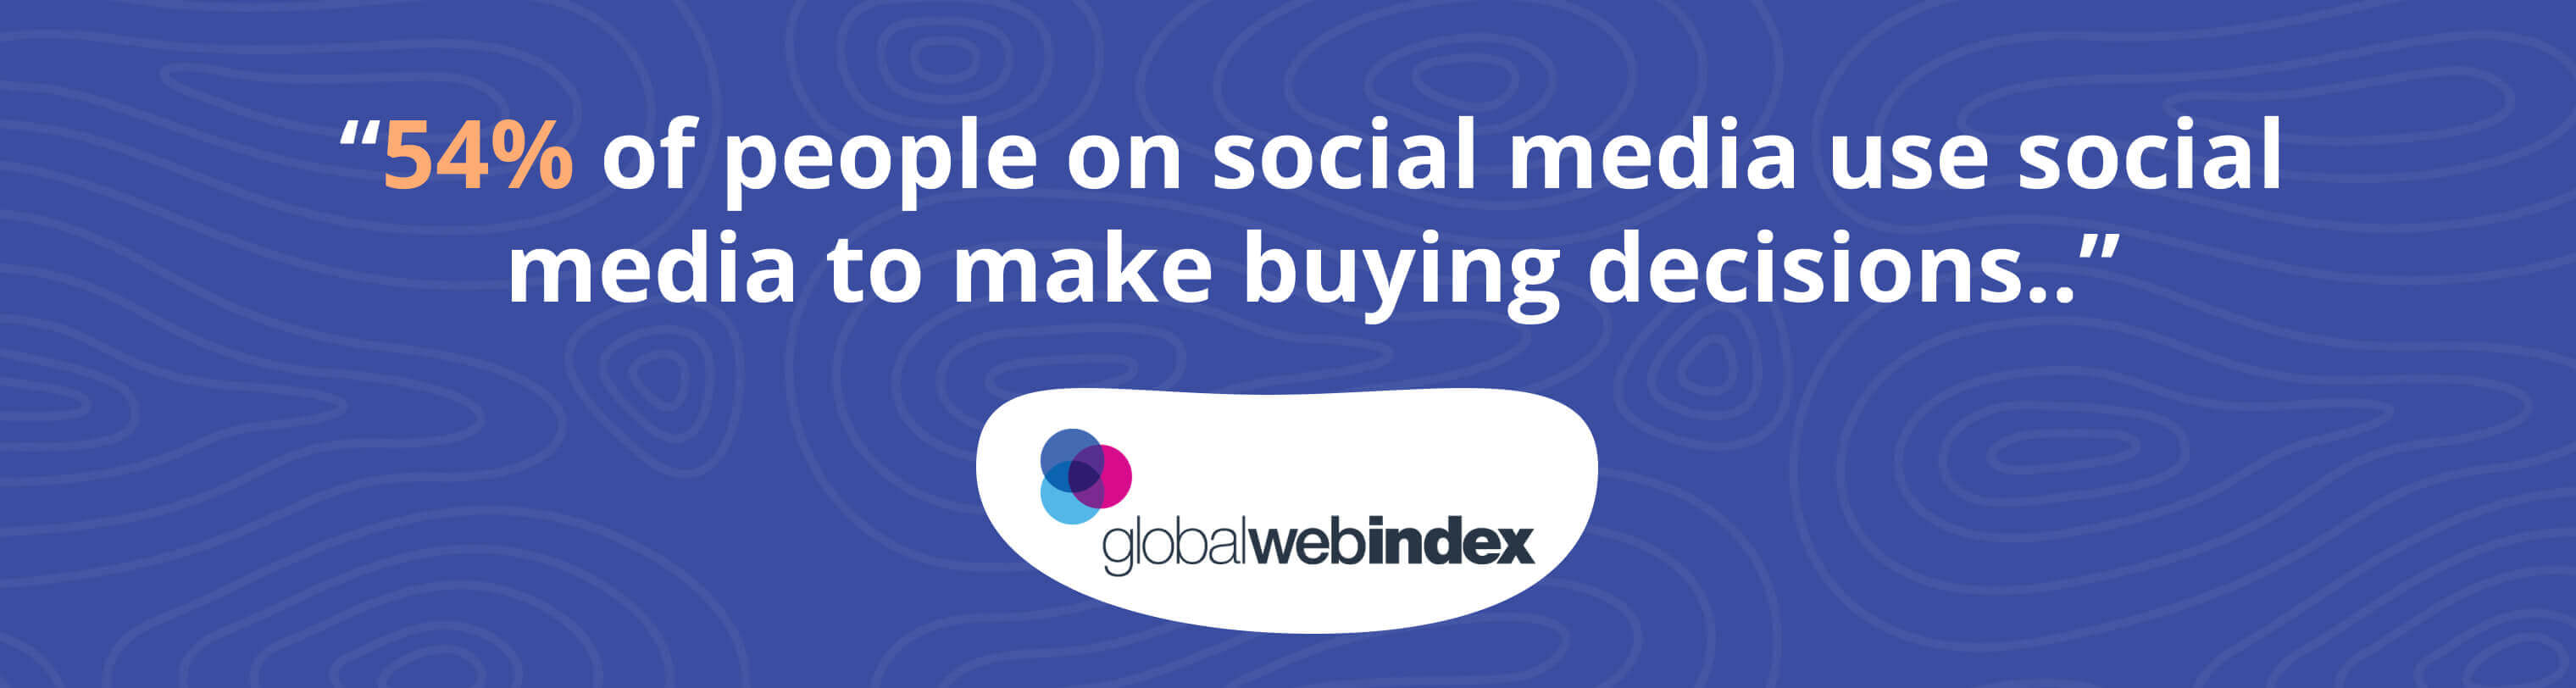 Social_Media_Usage_to_Make_Buying_Decisions.jpg